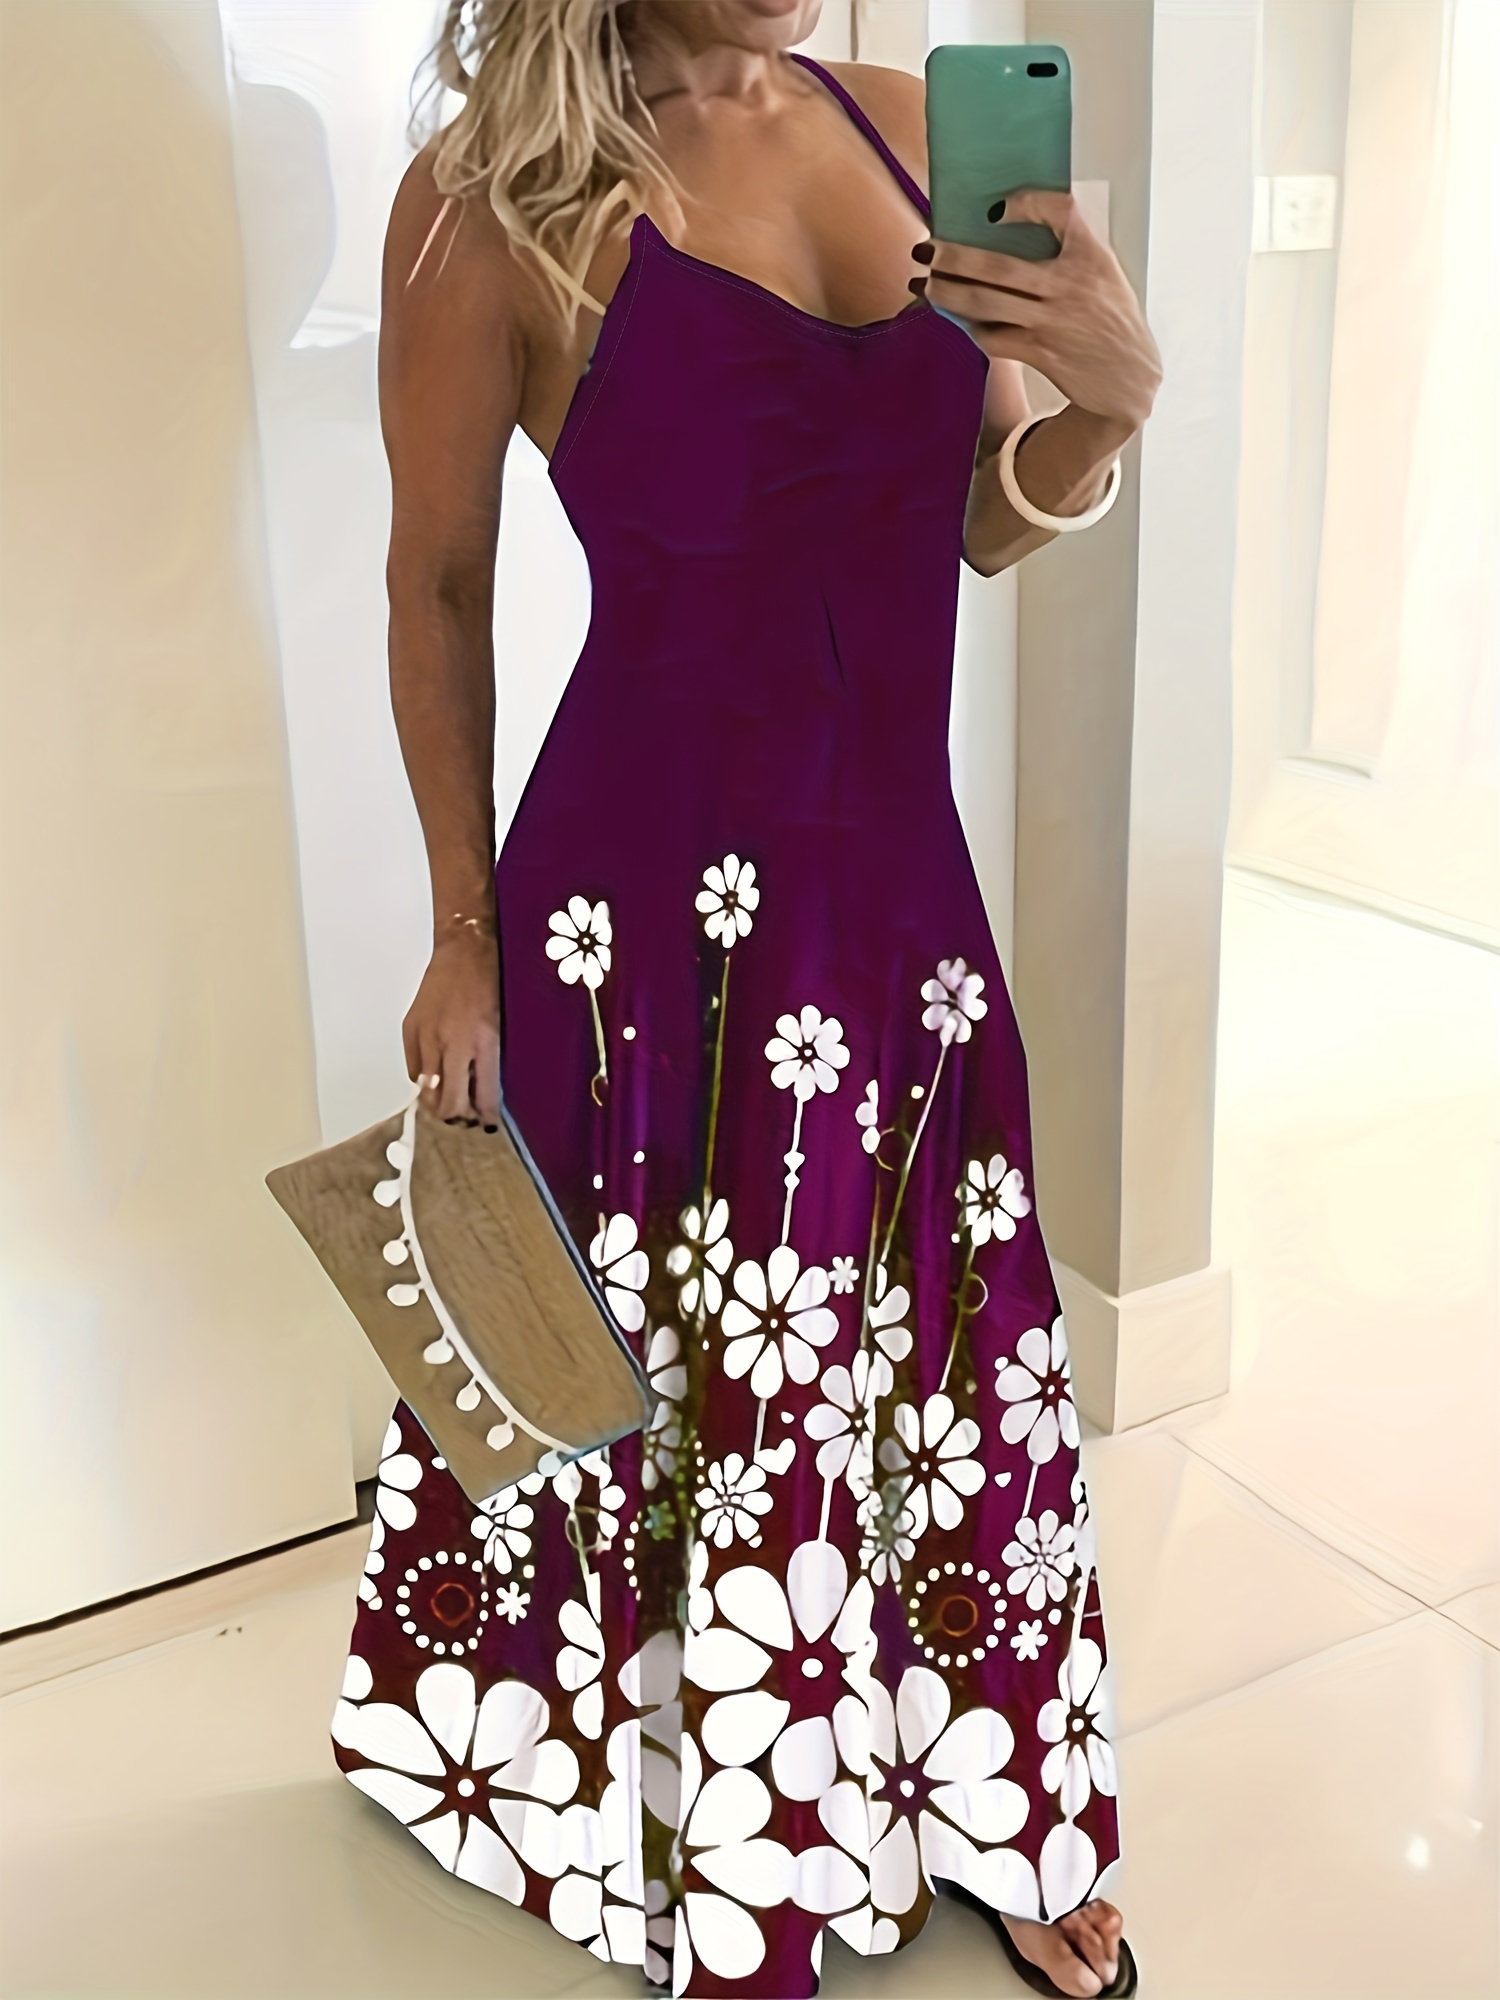 floral print spaghetti dress casual sleeveless summer maxi dress womens clothing